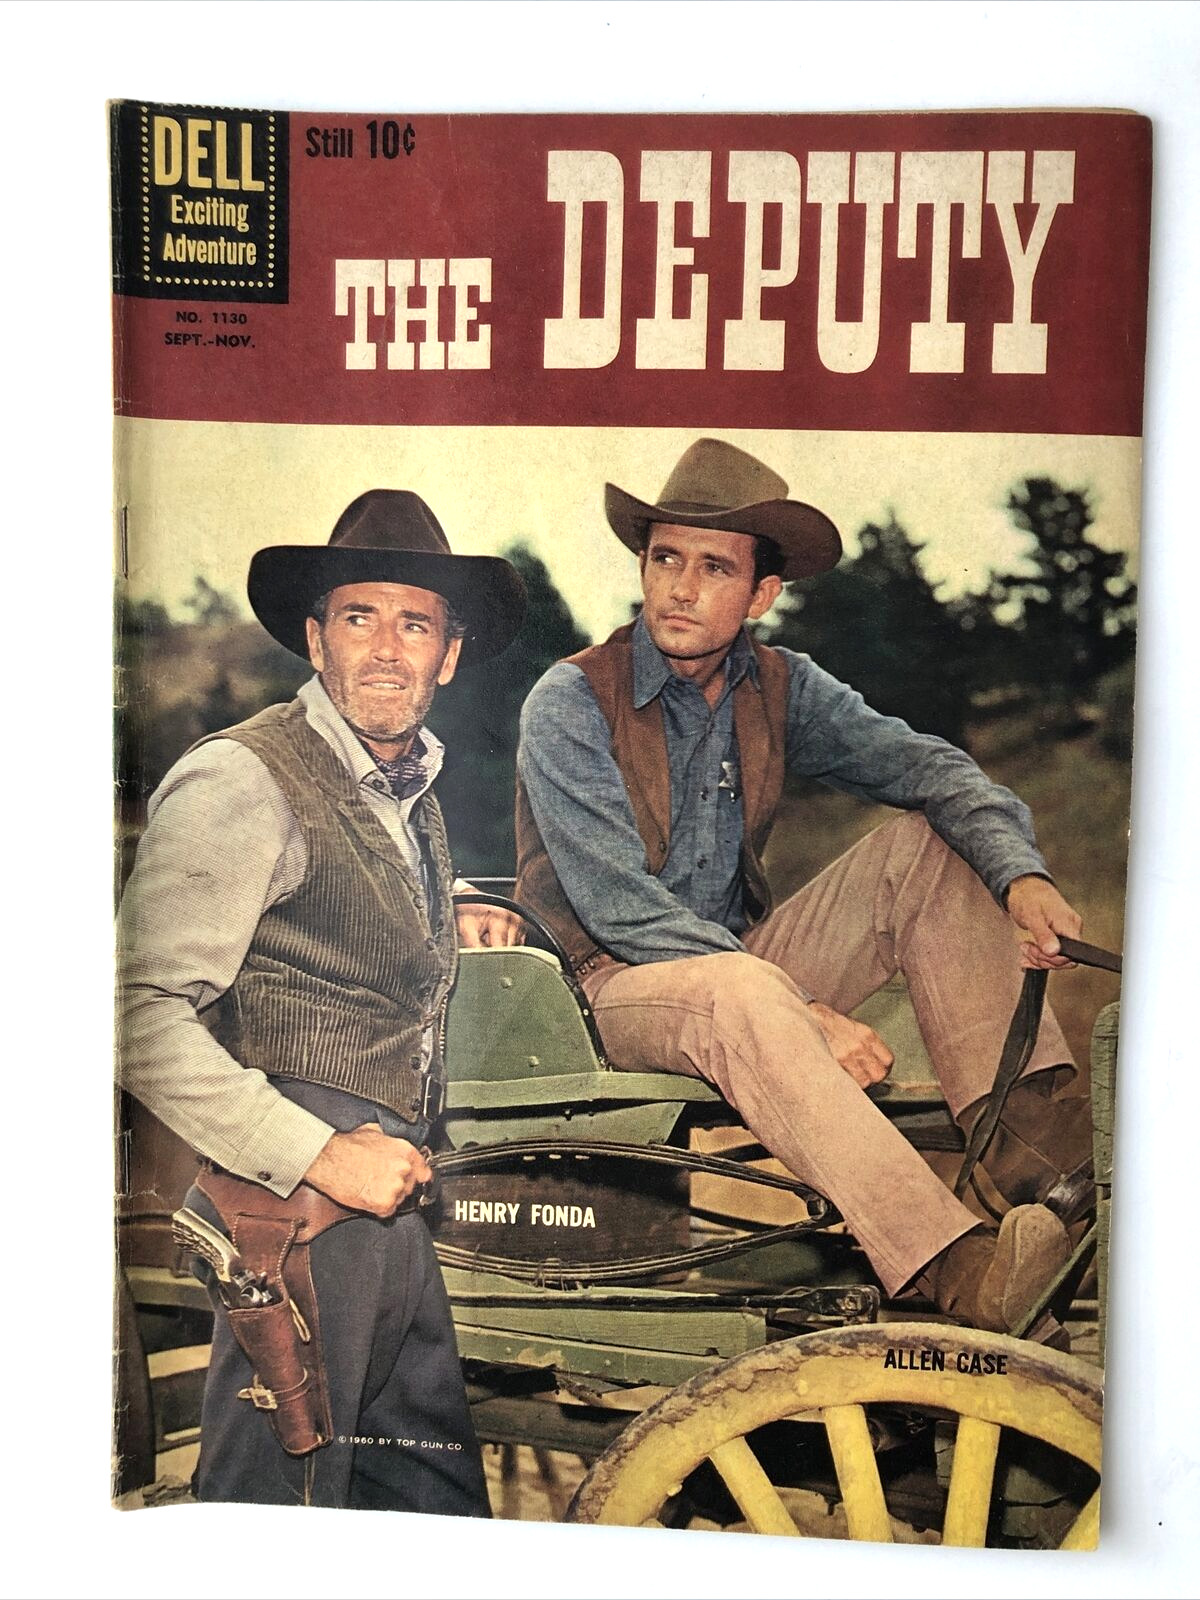 Dell Western Adventure Comic Book 1960 #1130 THE DEPUTY Henry Fonda Allen Case